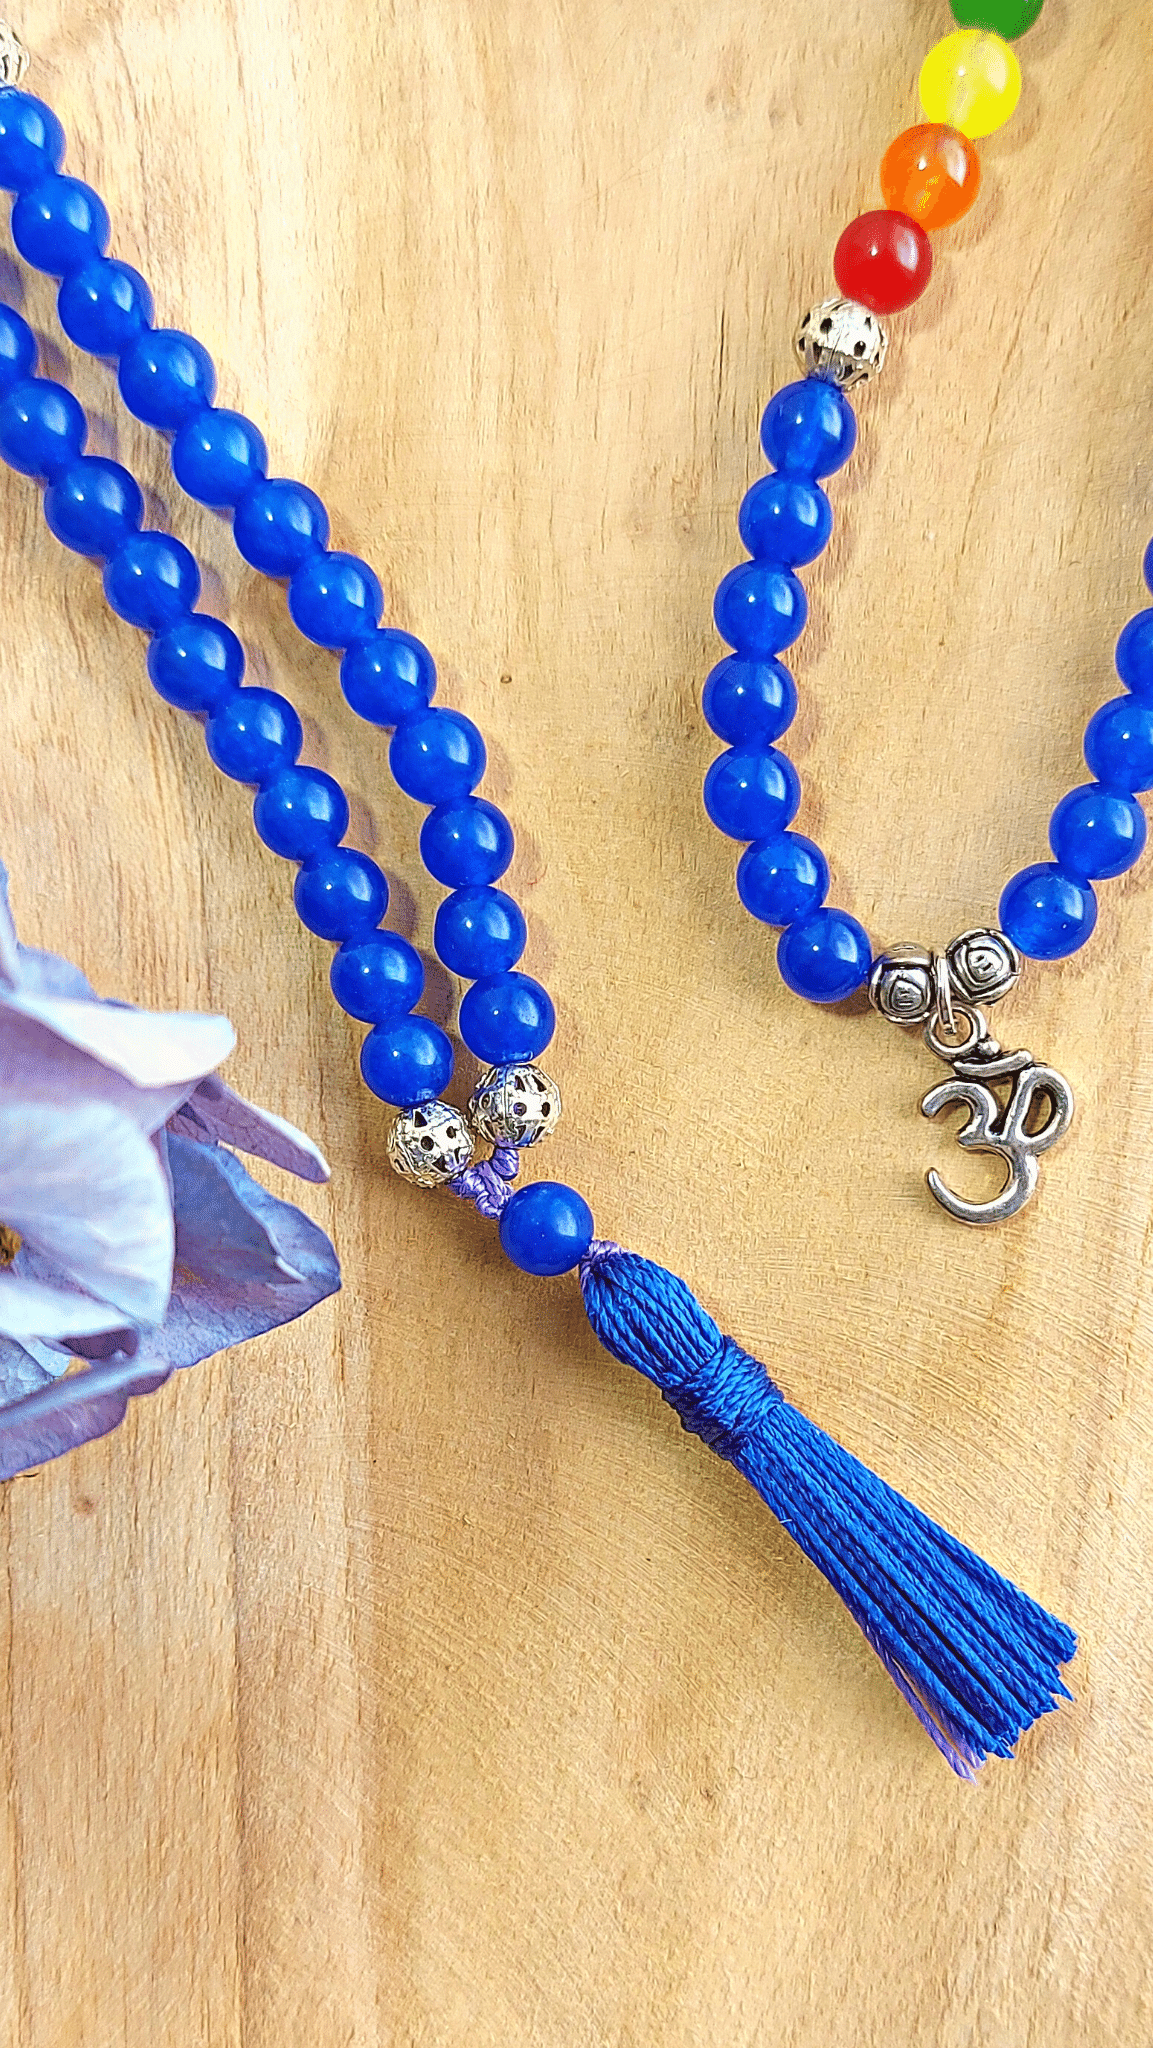 CHAKRA BALANCE Short Mala Meditation Necklace with Dark Blue Jade and Jade in Chakra Colors